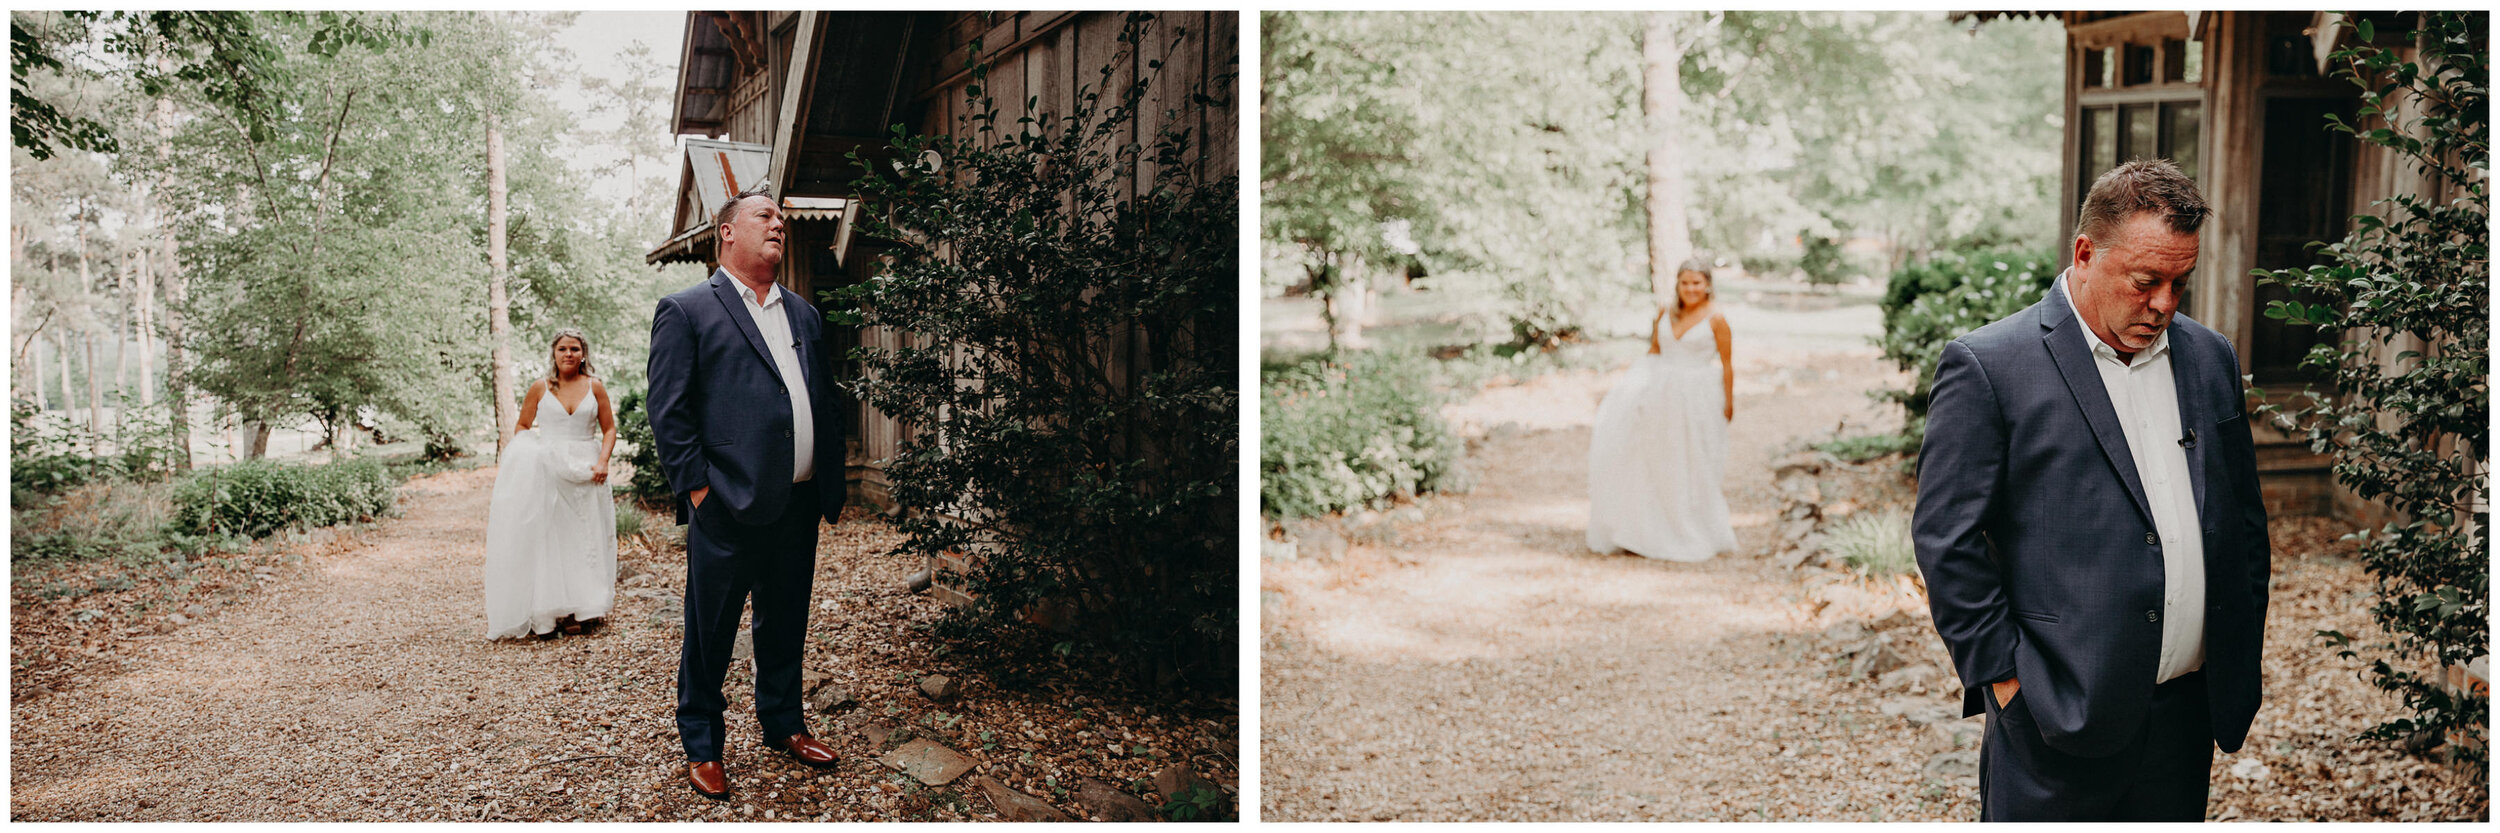 Atlanta_Wedding Day || The Farm at Rome-Ga, Aline Marin Photography20.jpg